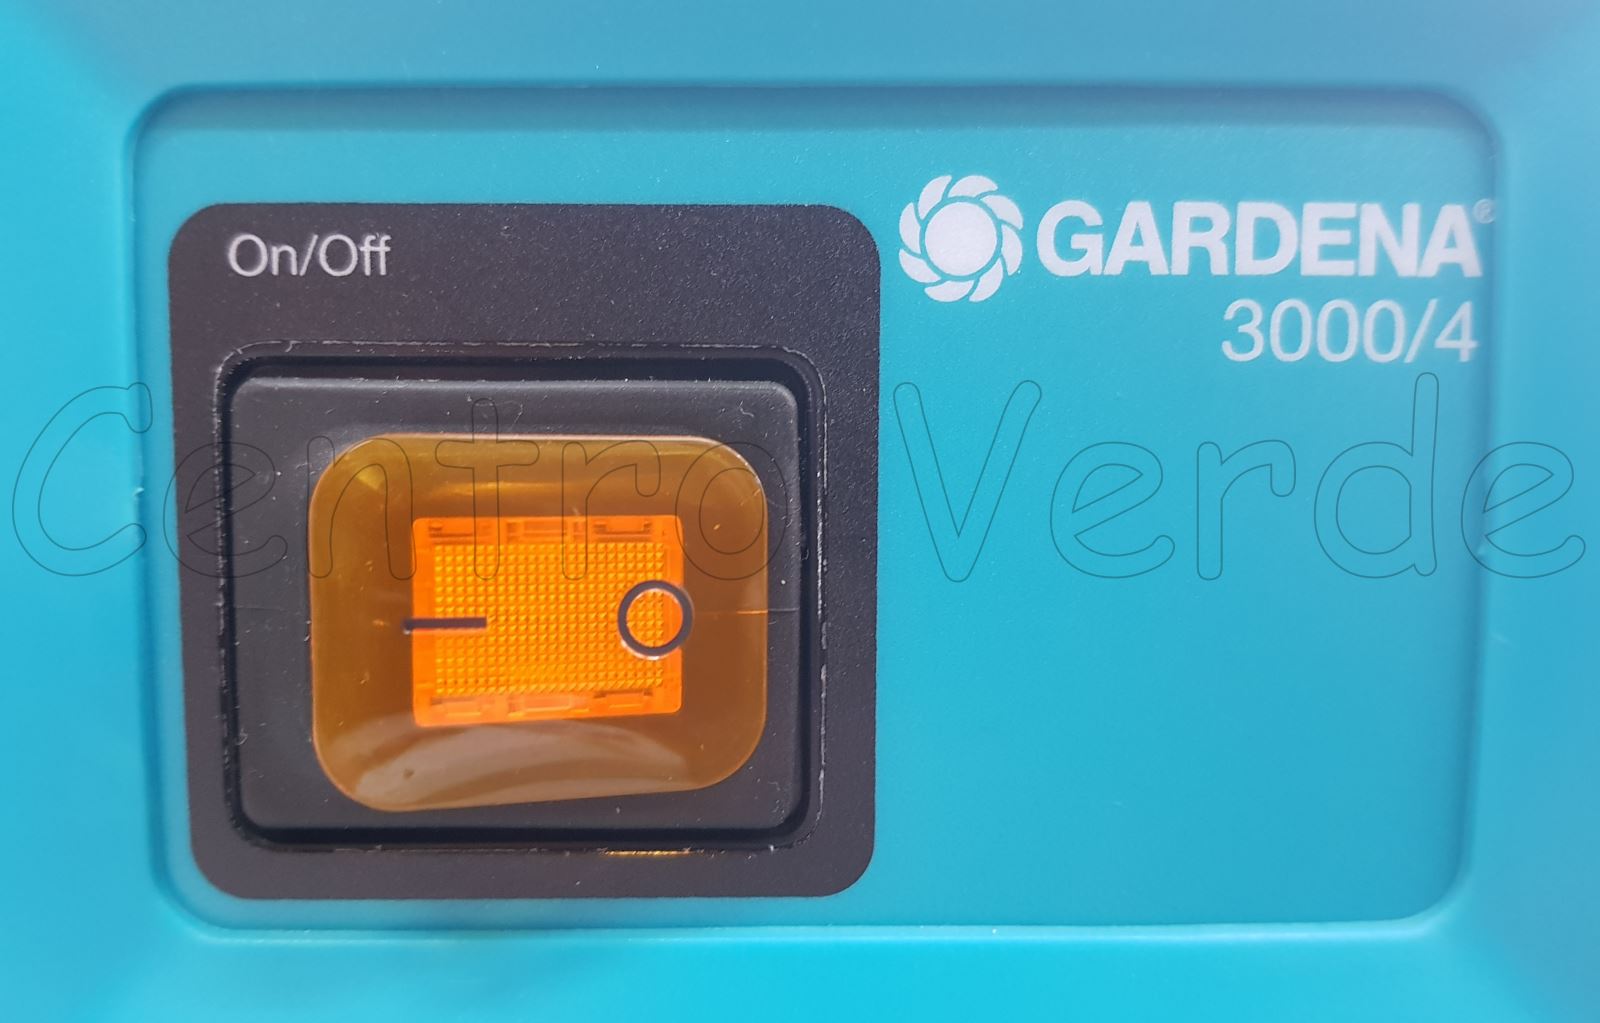 Pompa Elettrica da Giardino 3000/4 Classic Gardena